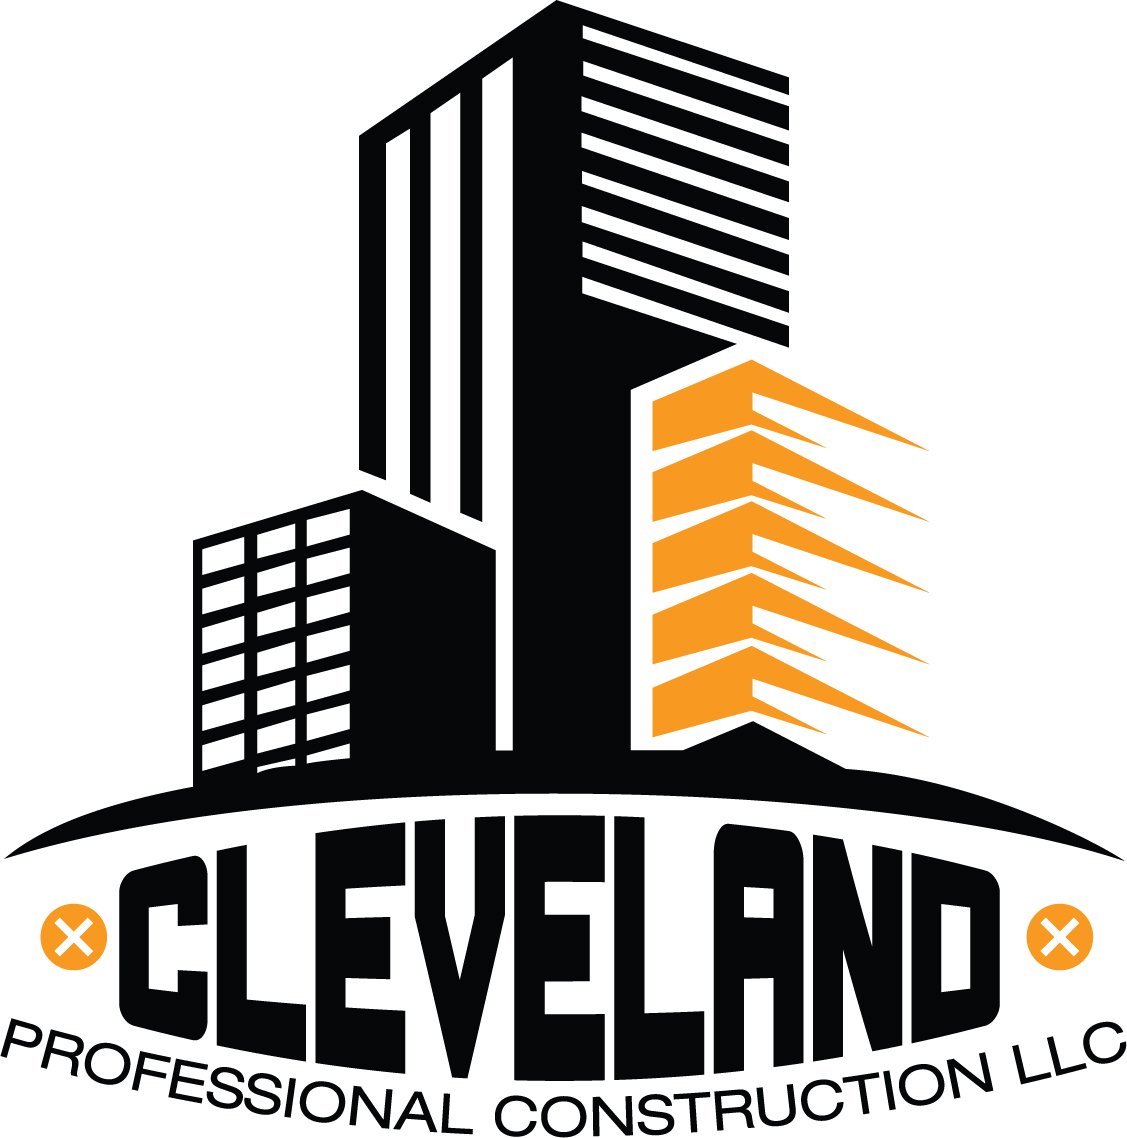 Cleveland Professional Construction LLC